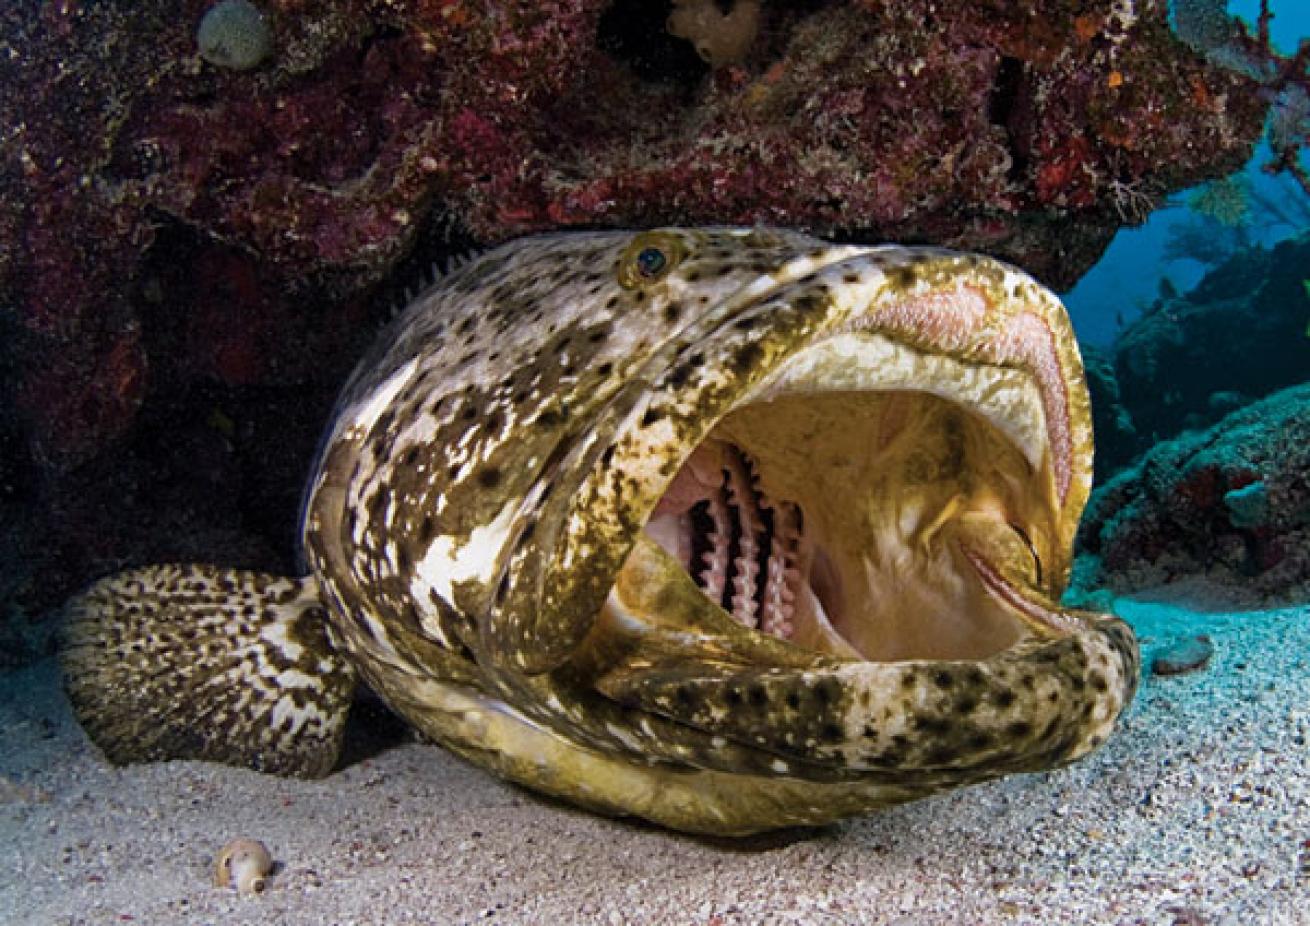 Grouper underwater photo in Fort Lauderdale, Florida